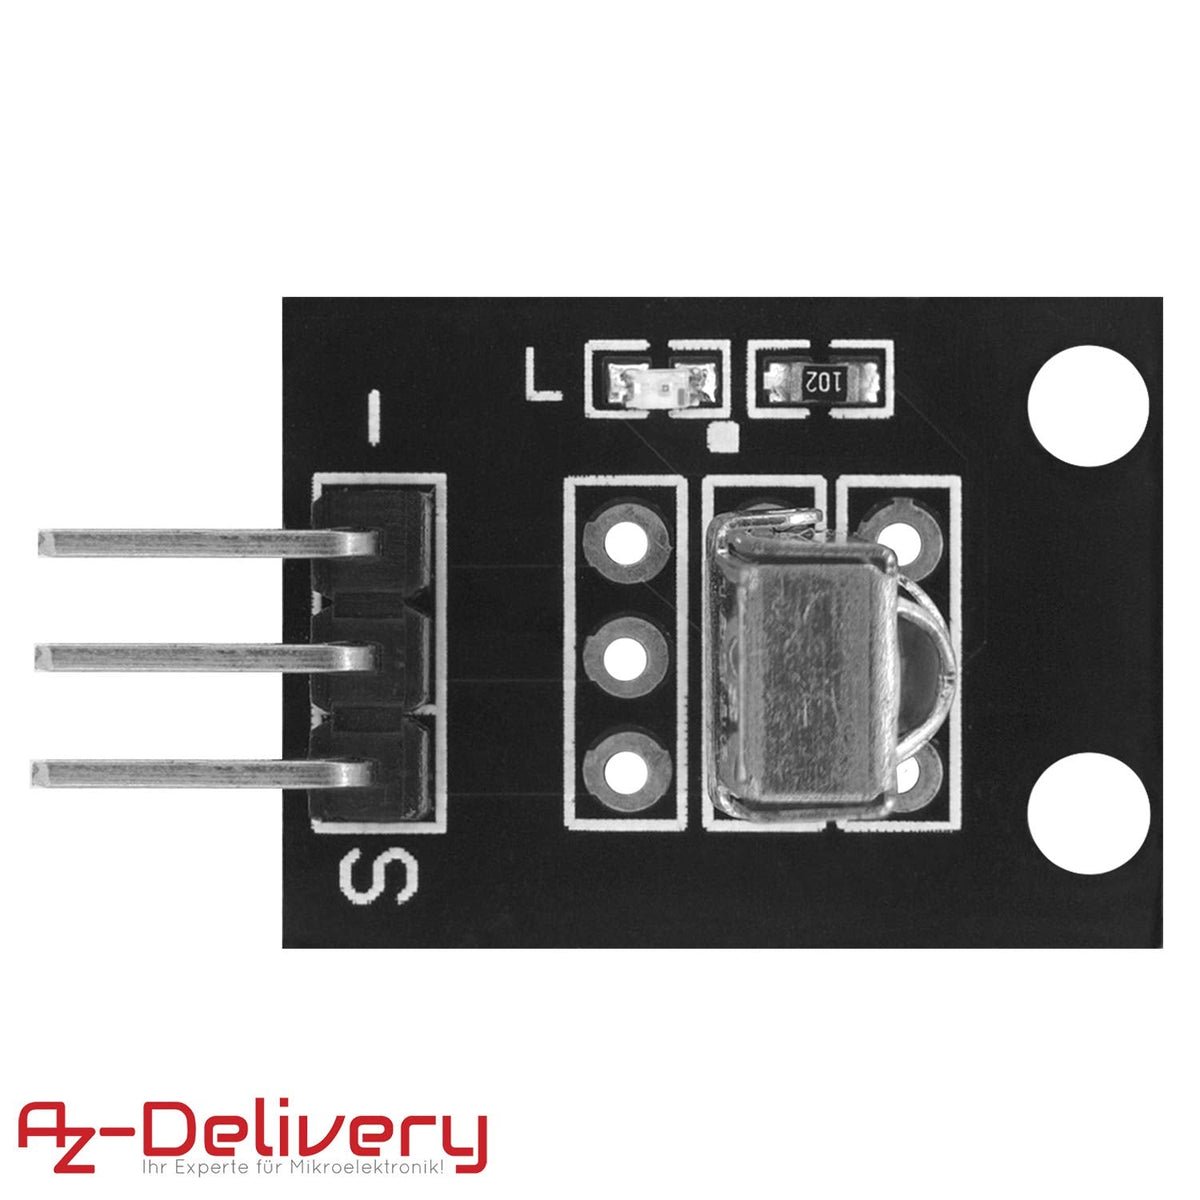 IR Receiver Infrared Receiver CHQ1838 Sensor Module For Arduino